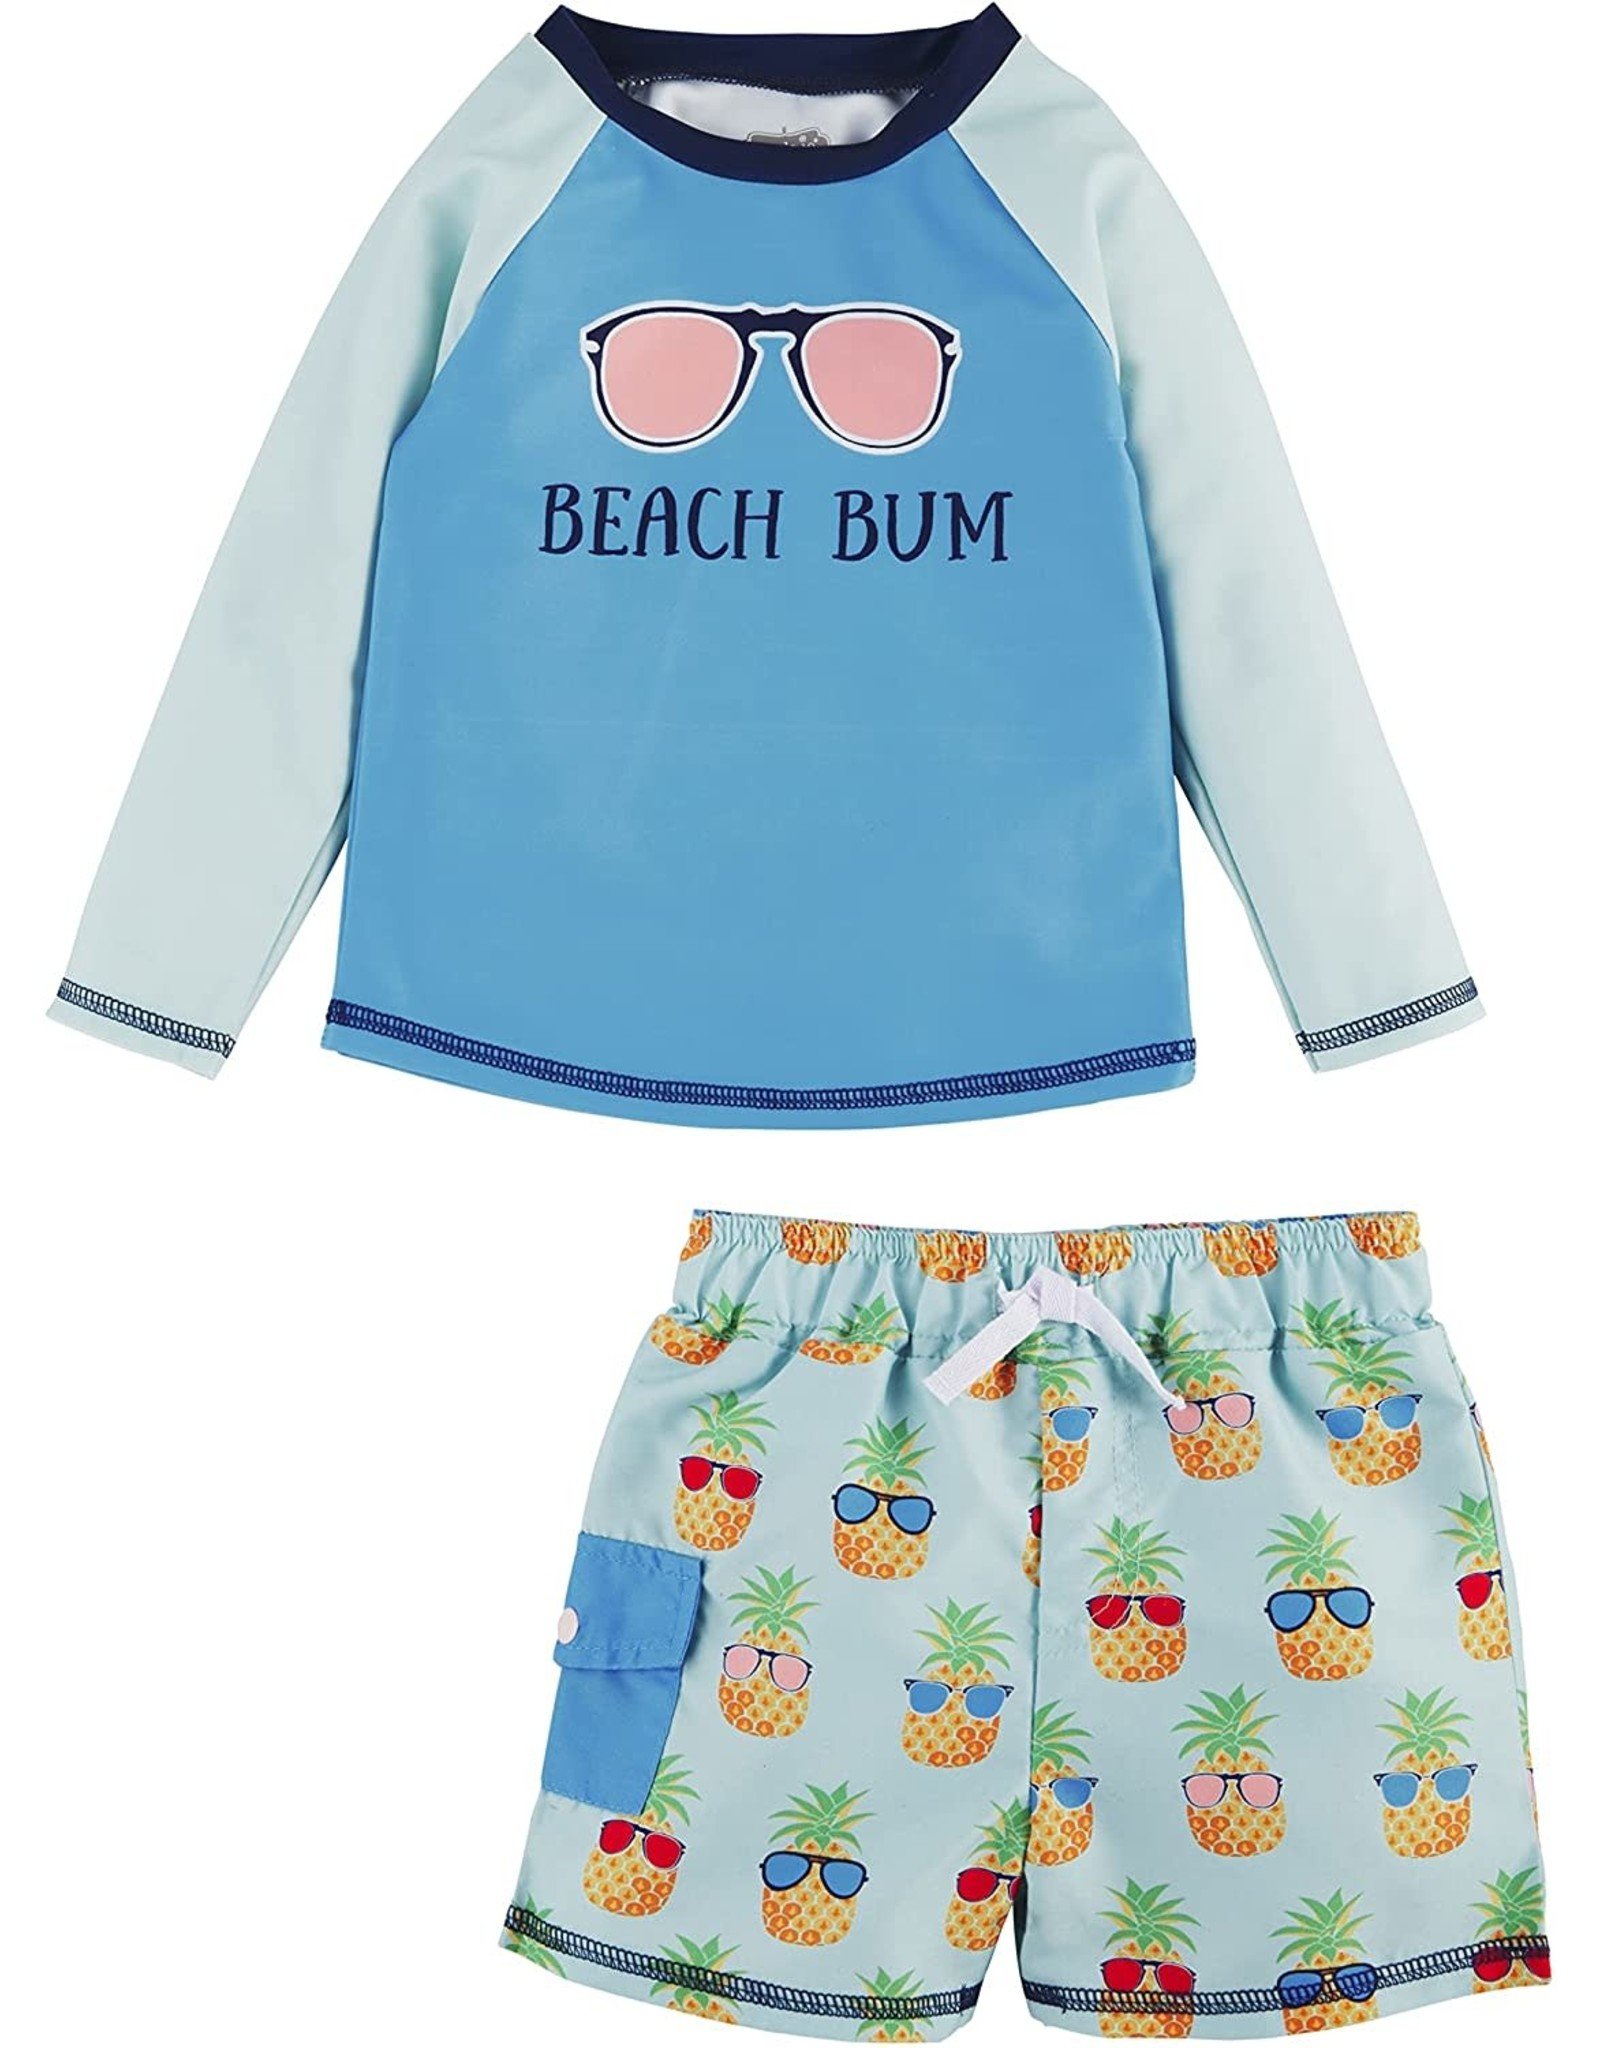 Mud Pie Little Boys Beach Bum Rash-guard Swimsuit Set LG 4T-5T